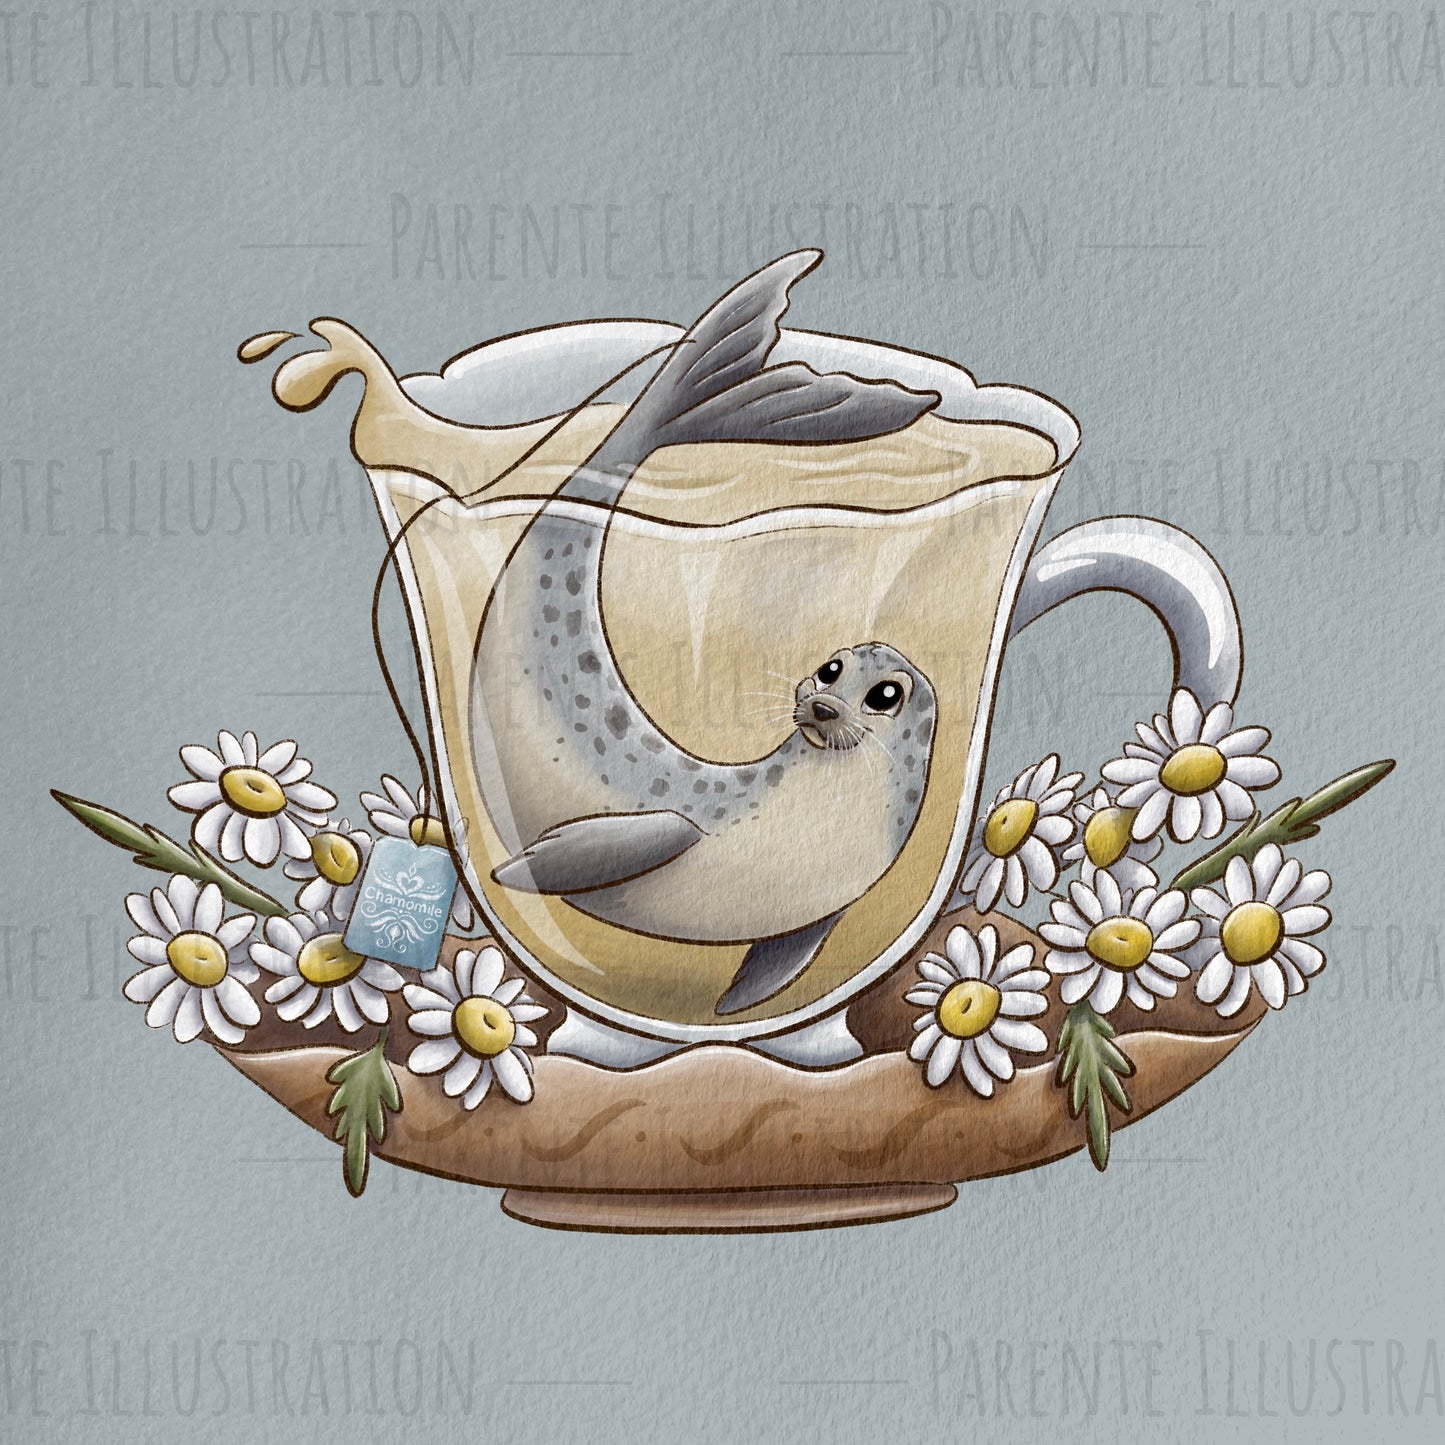 Tea Creatures Print: Seal